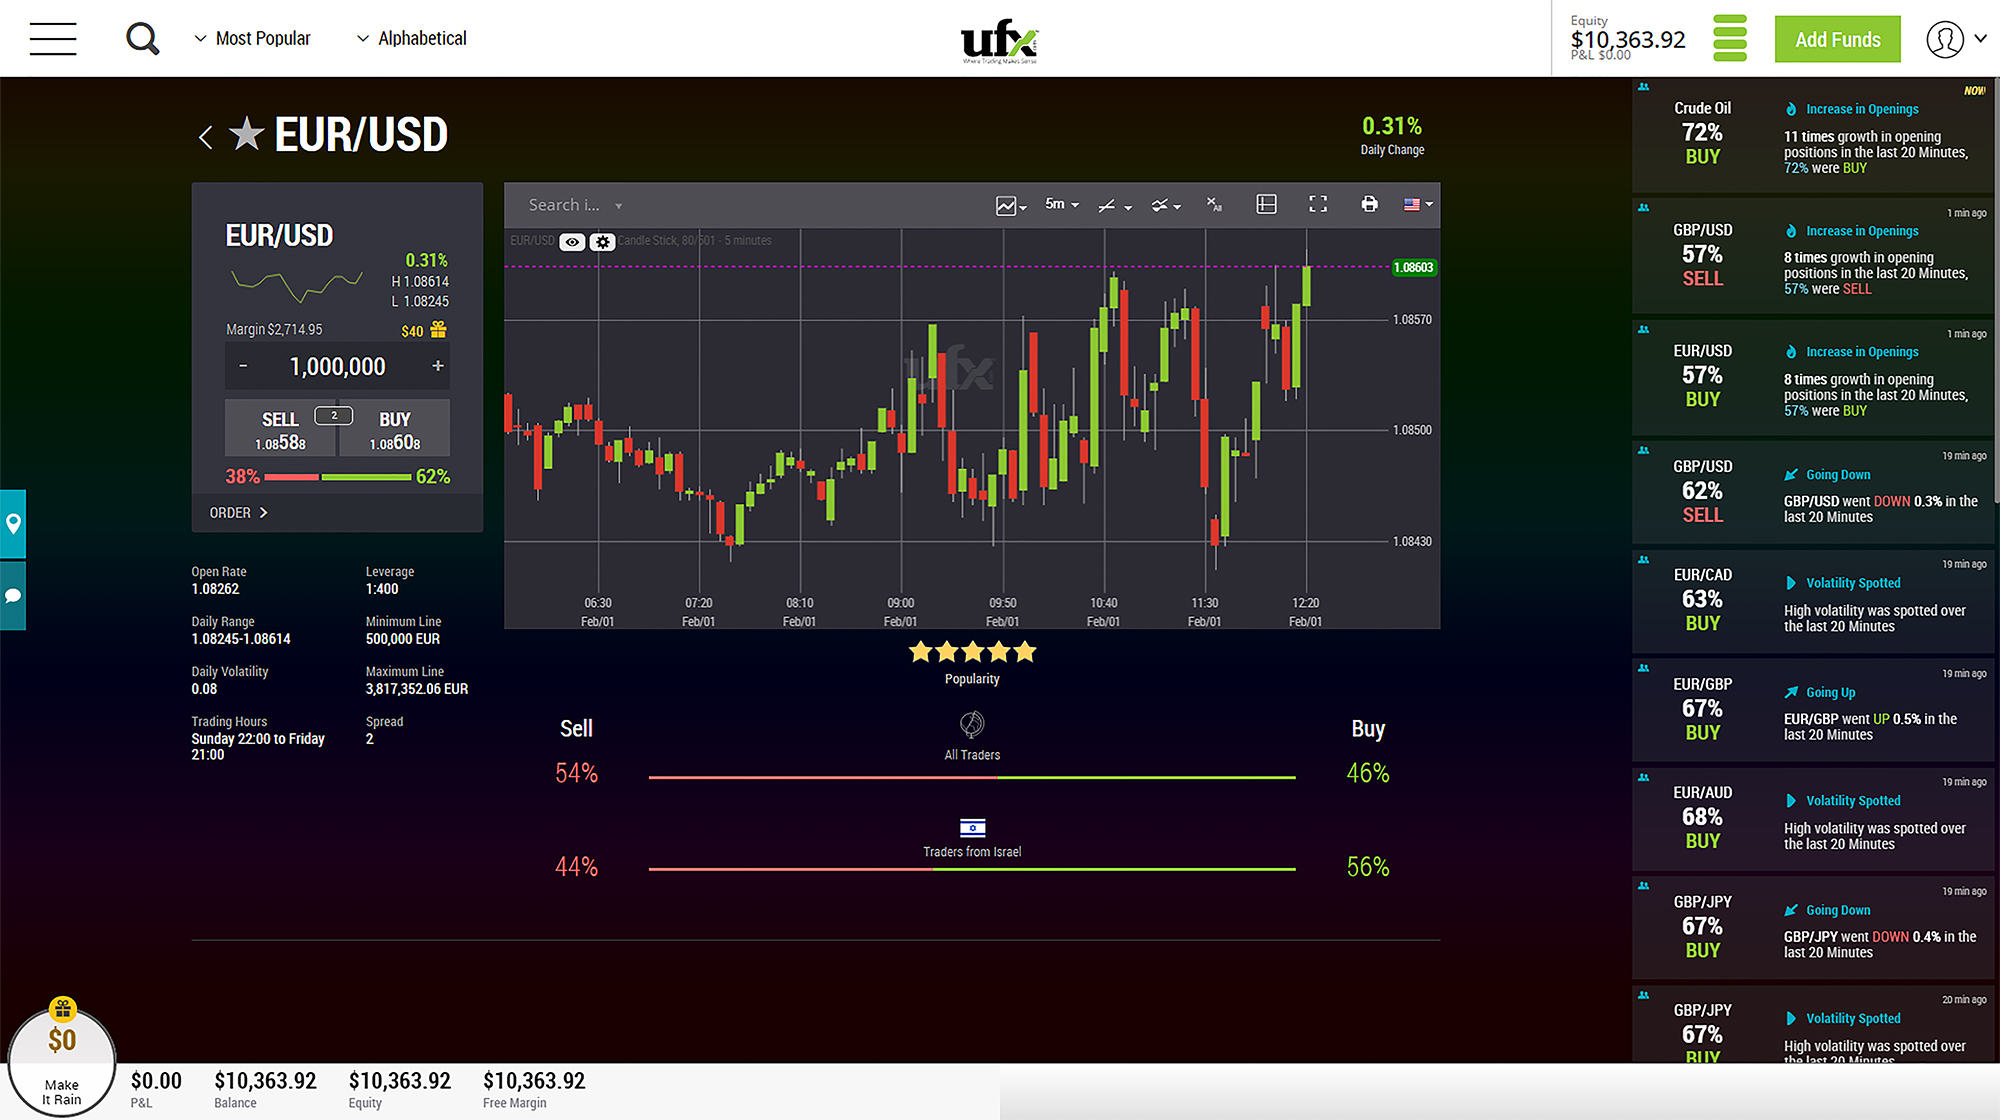 UFX.com Launches New Online Trading Platform ParagonEx 4.0 ...